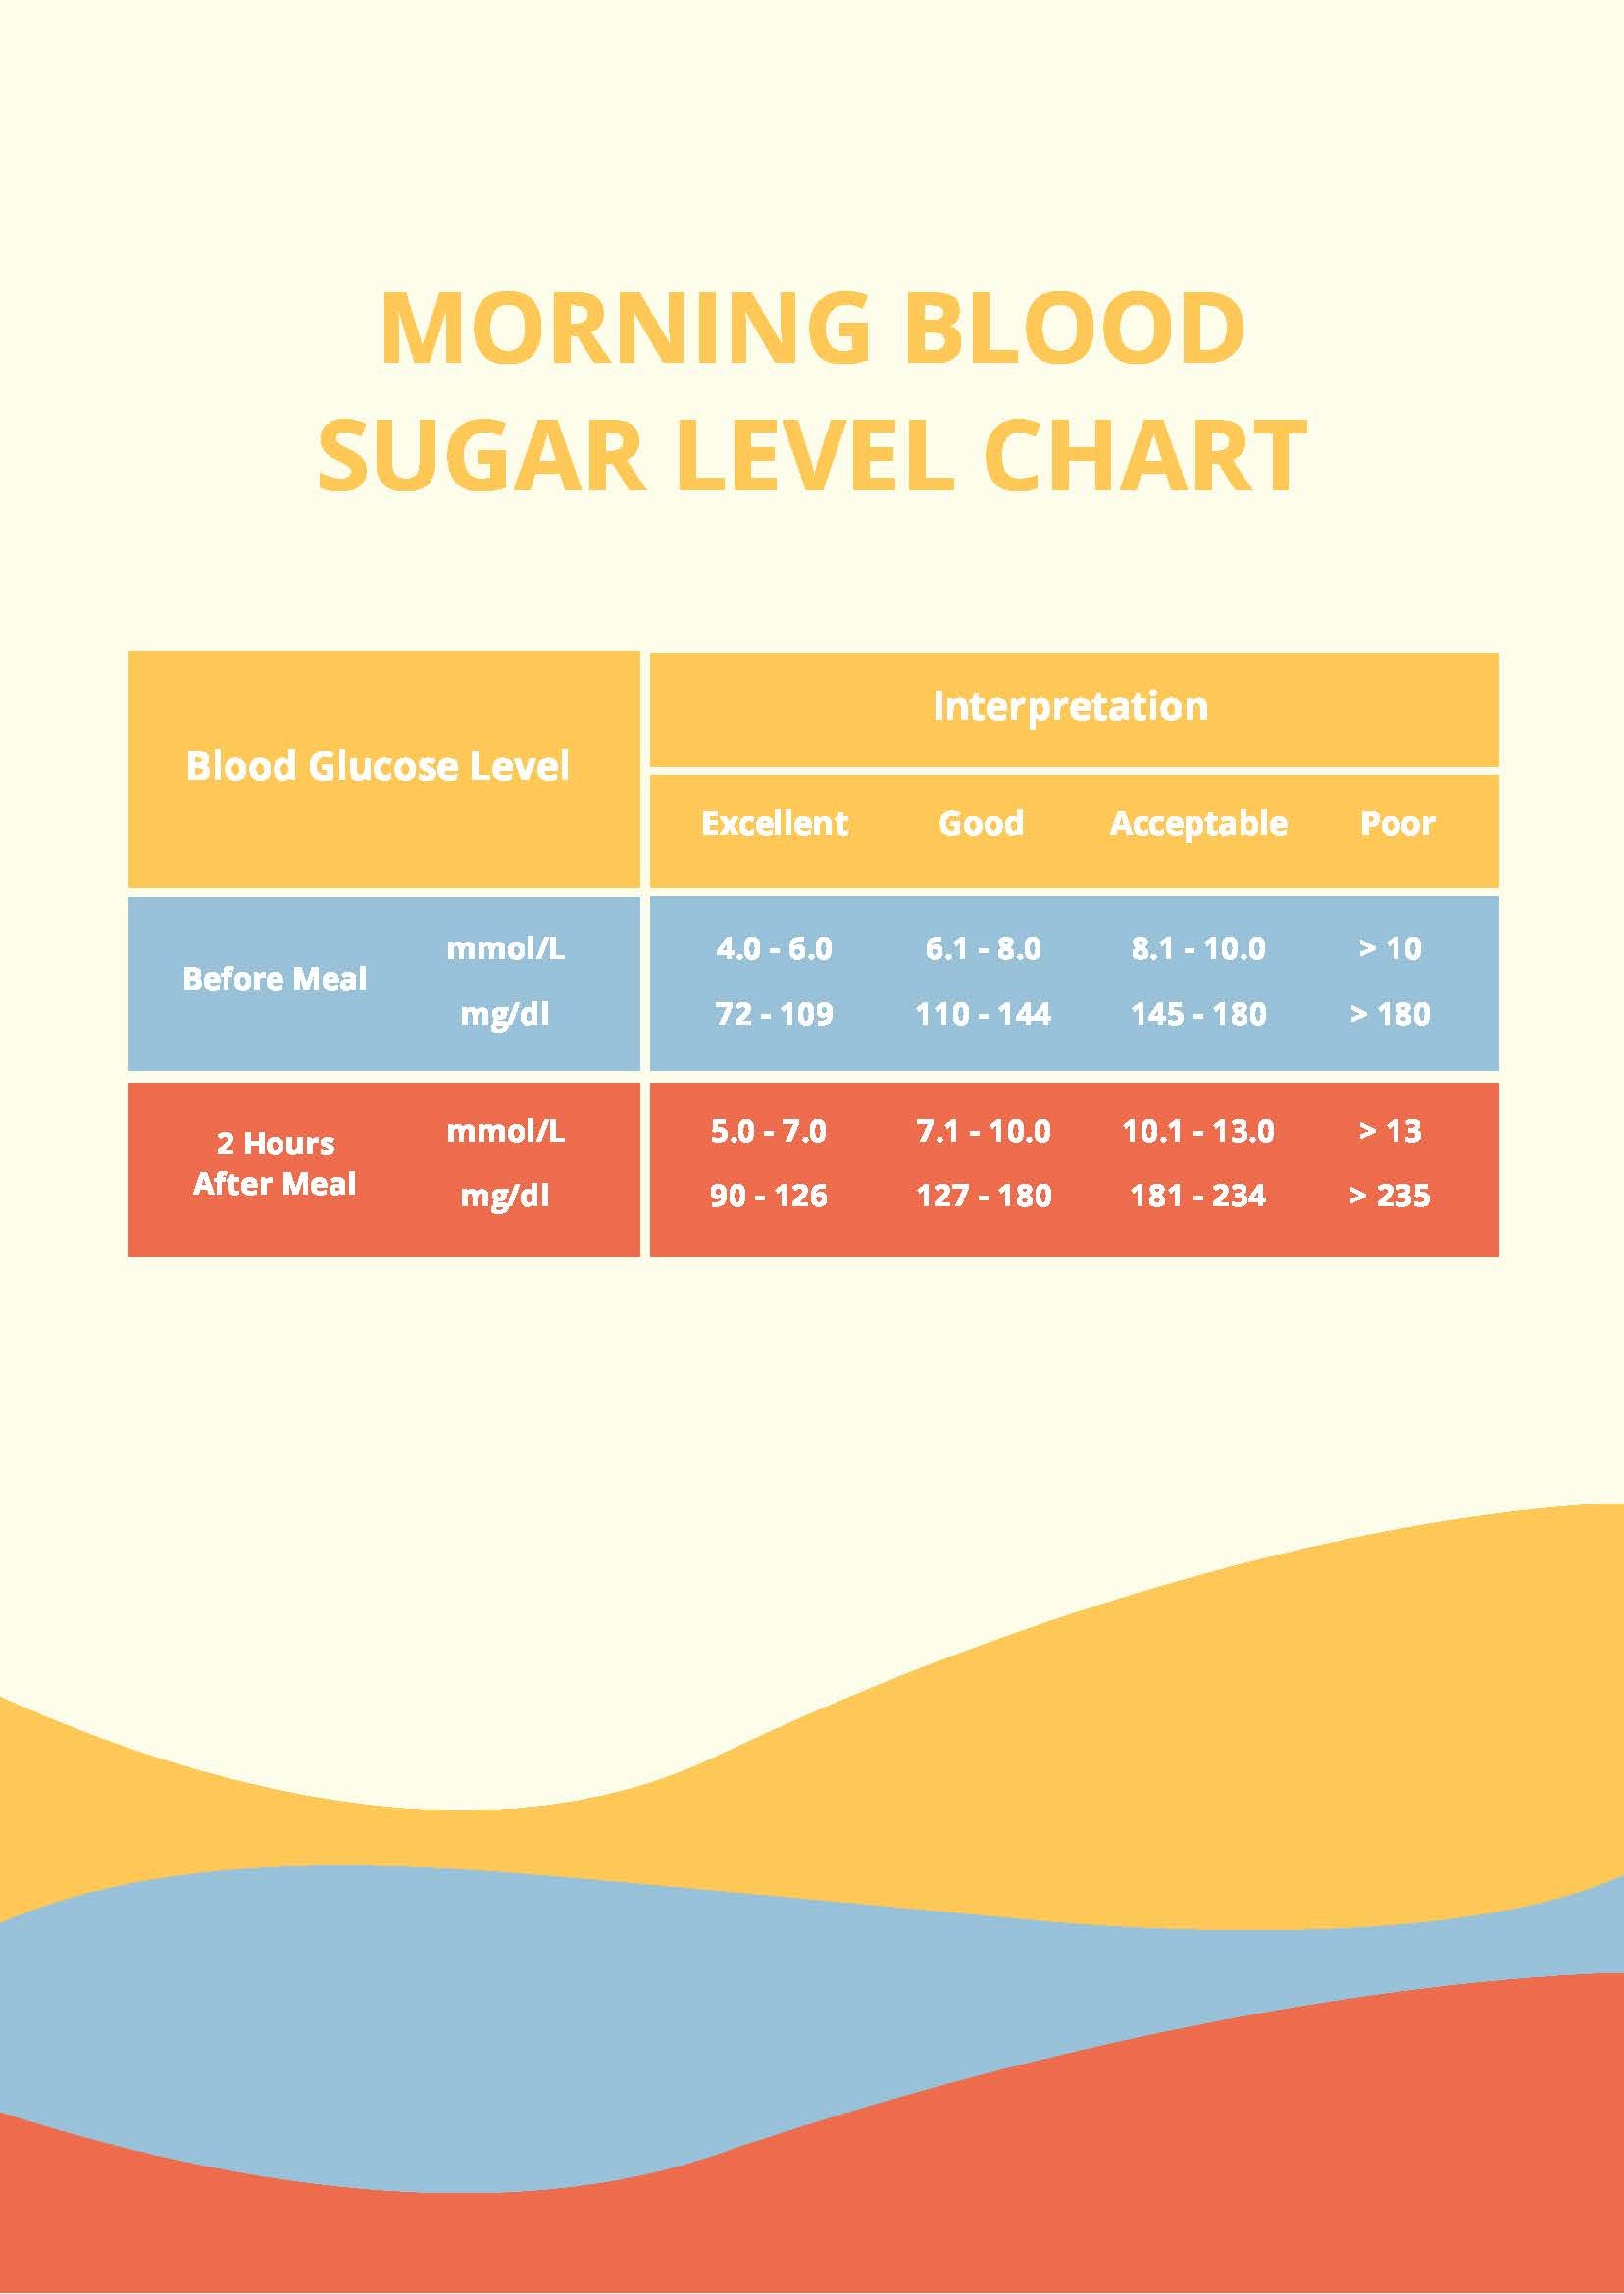 Morning Blood Sugar Level Chart 9d8xt 